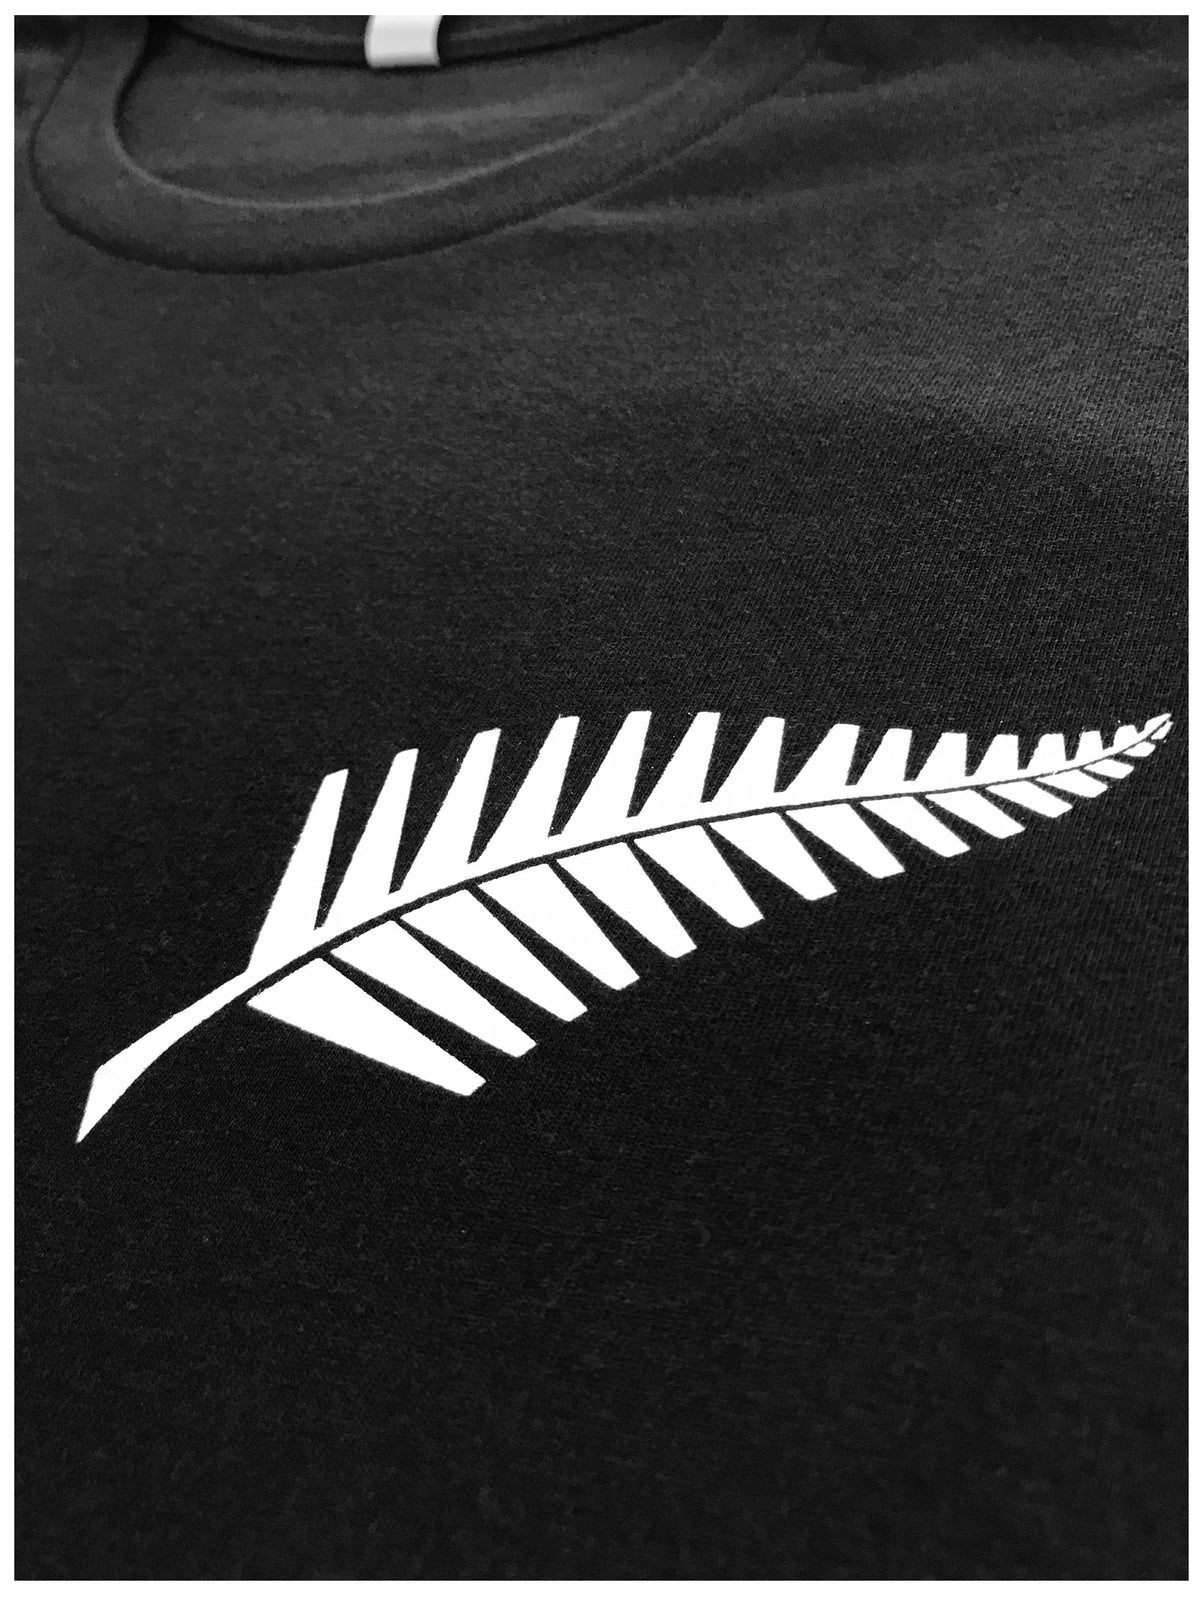 New Zealand Pride | Kiwi Silver Fern Southern Cross Men Women Black T-shirt